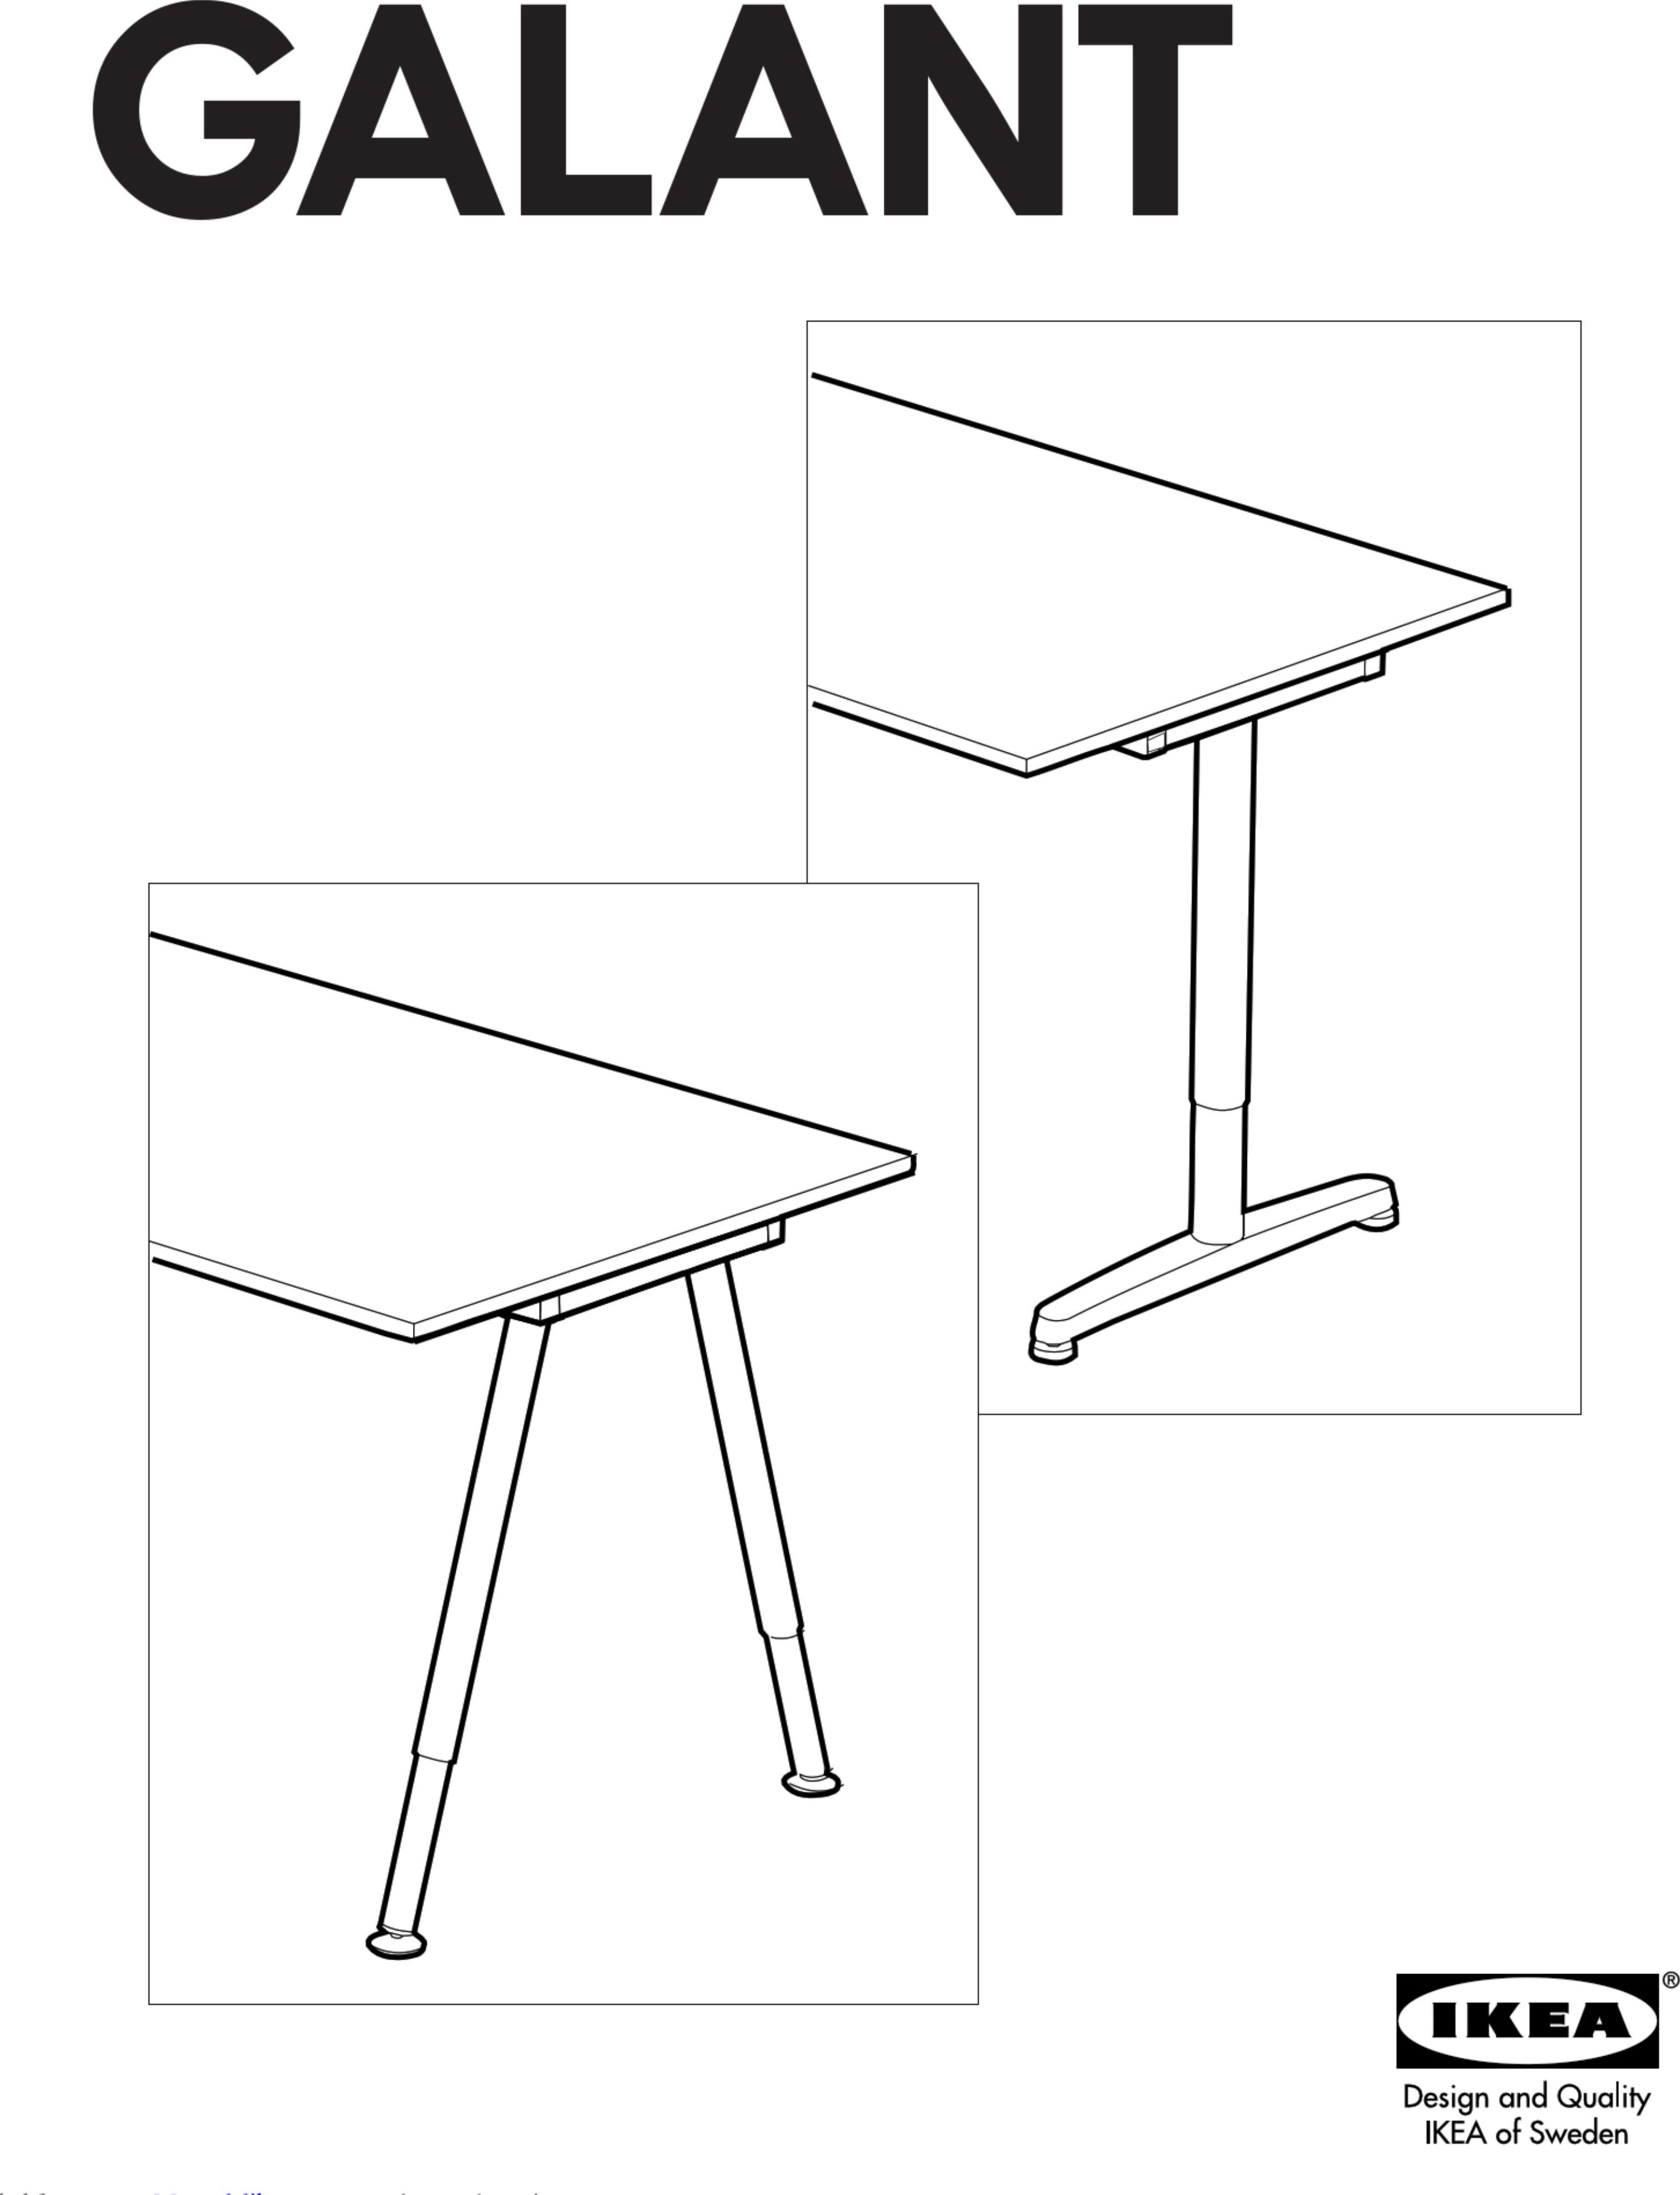 Ikea Galant Frame 63 Instructions Manual 1003134 User